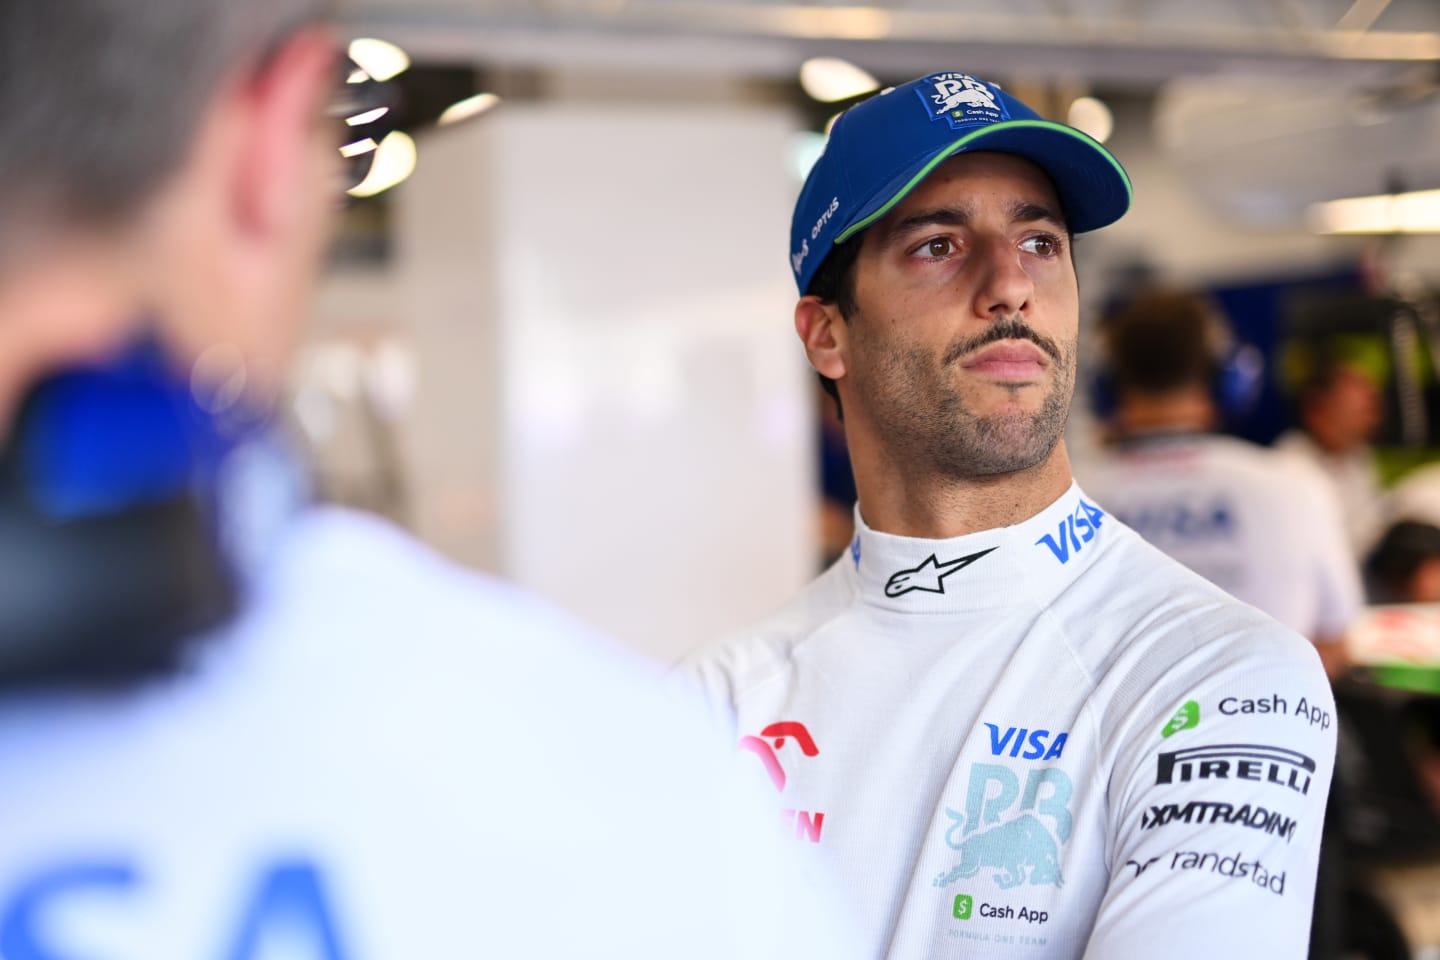 JEDDAH, SAUDI ARABIA - MARCH 07: Daniel Ricciardo of Australia and Visa Cash App RB prepares to